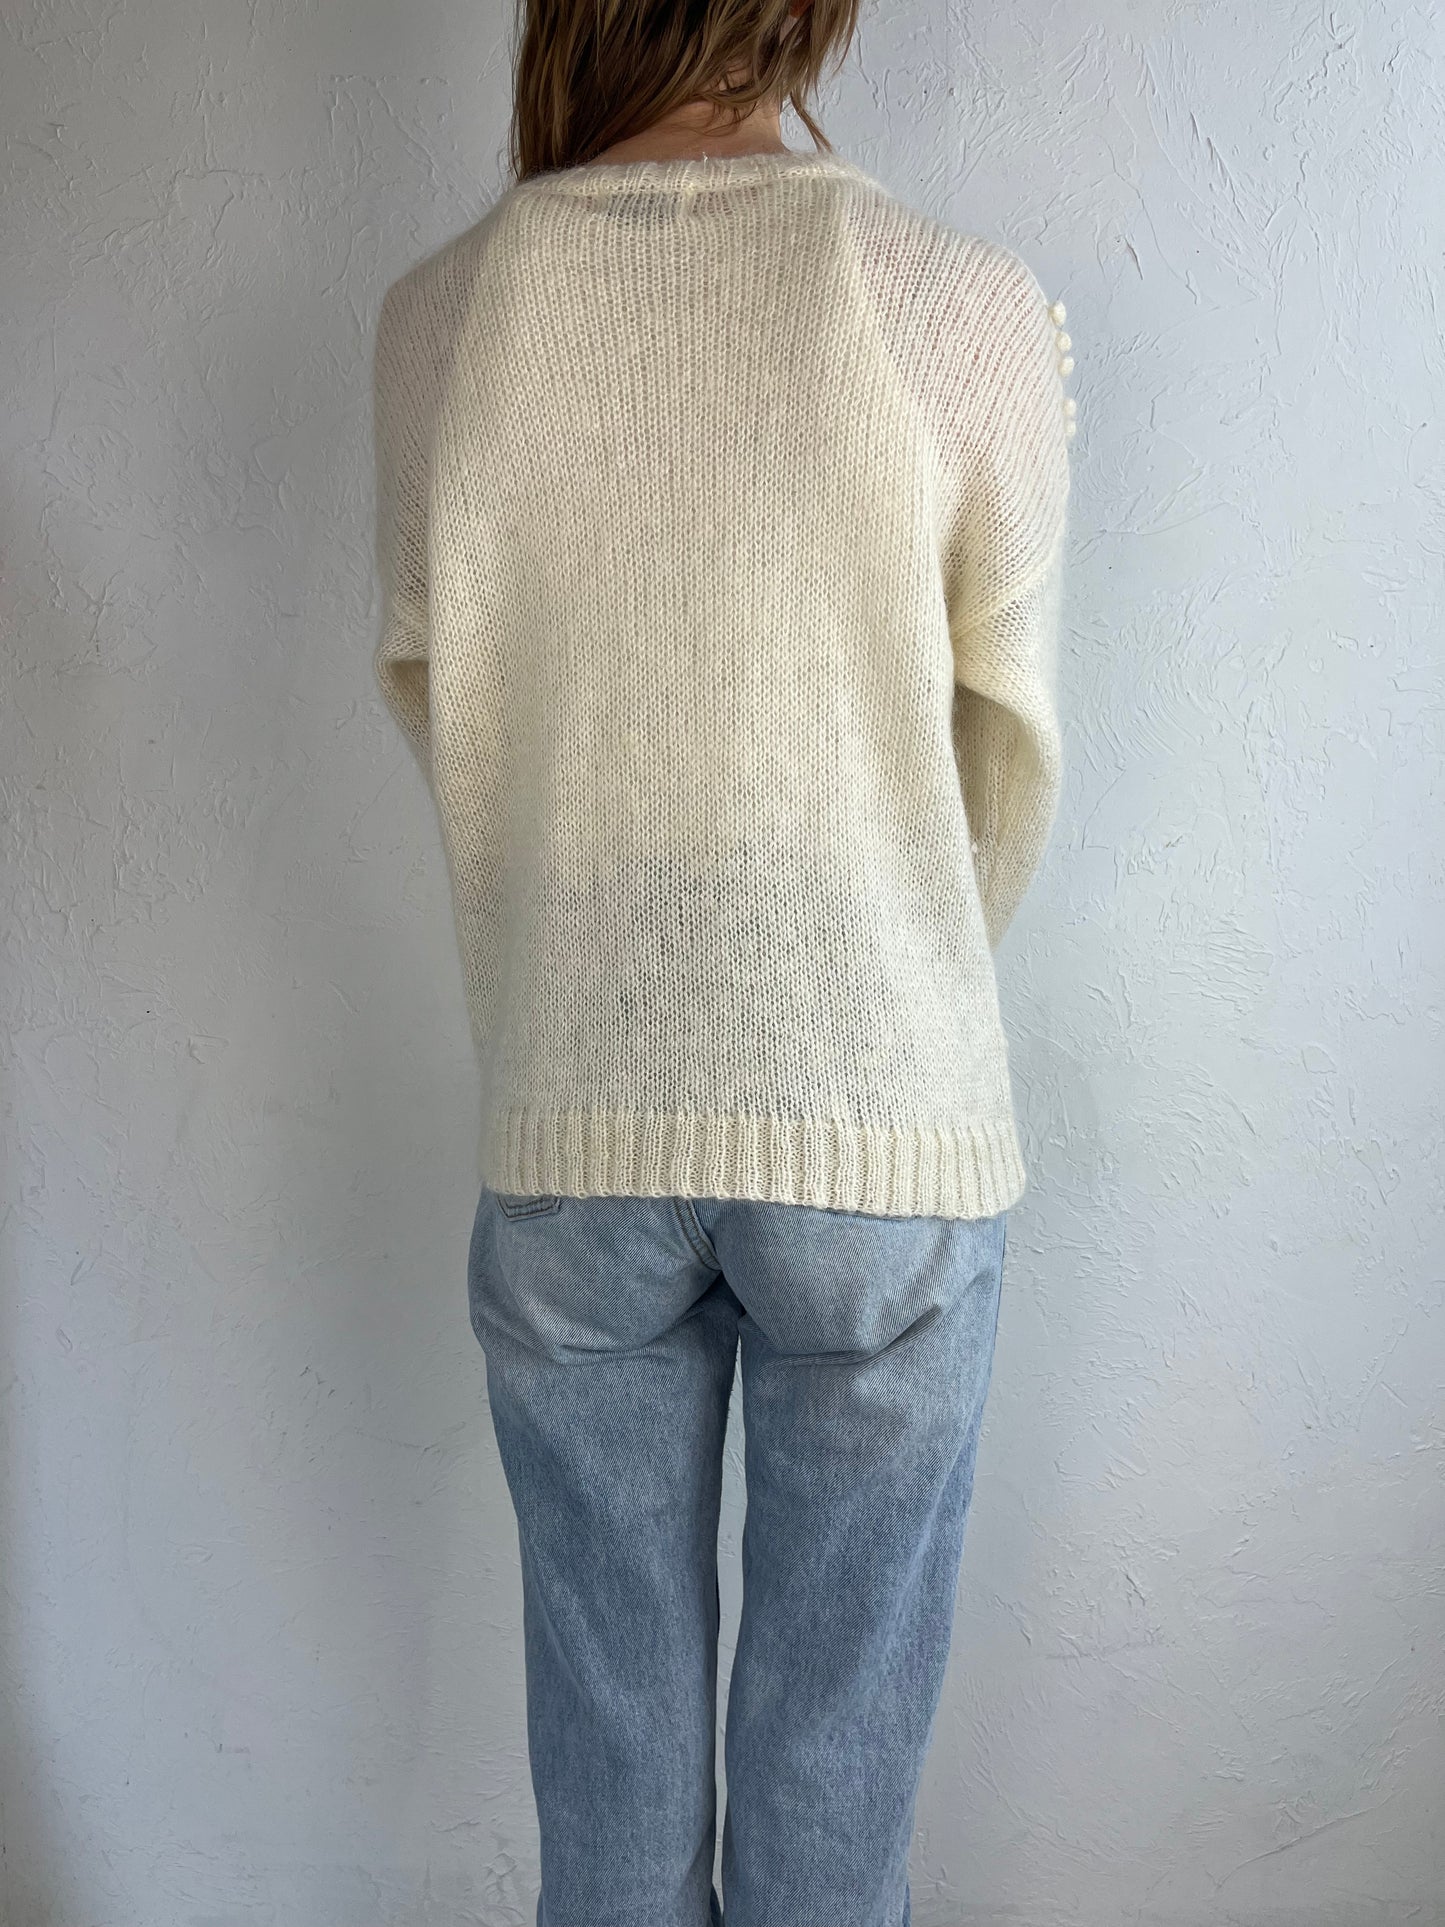 90s 'Graffiti' White Loose Knit Sweater / Medium